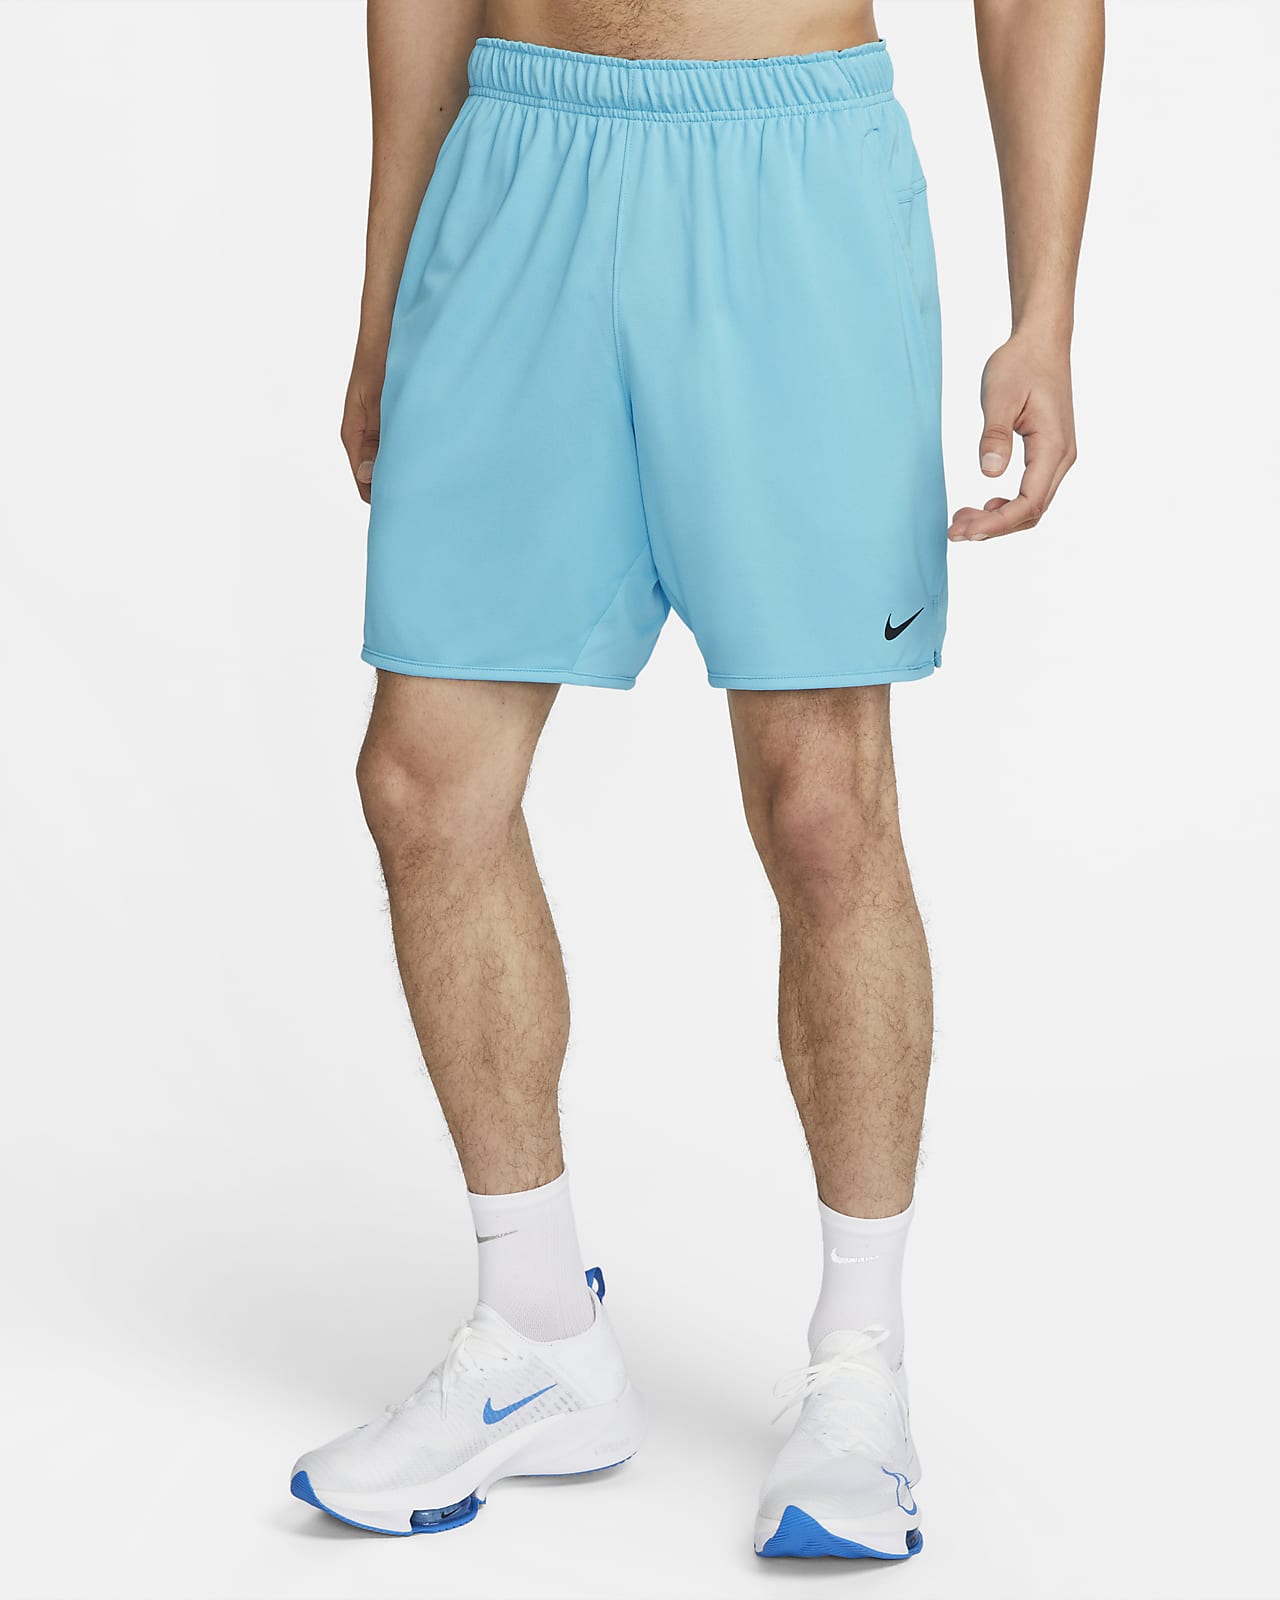 Nike Dri-FIT Totality Men's 7" Unlined Knit Shorts